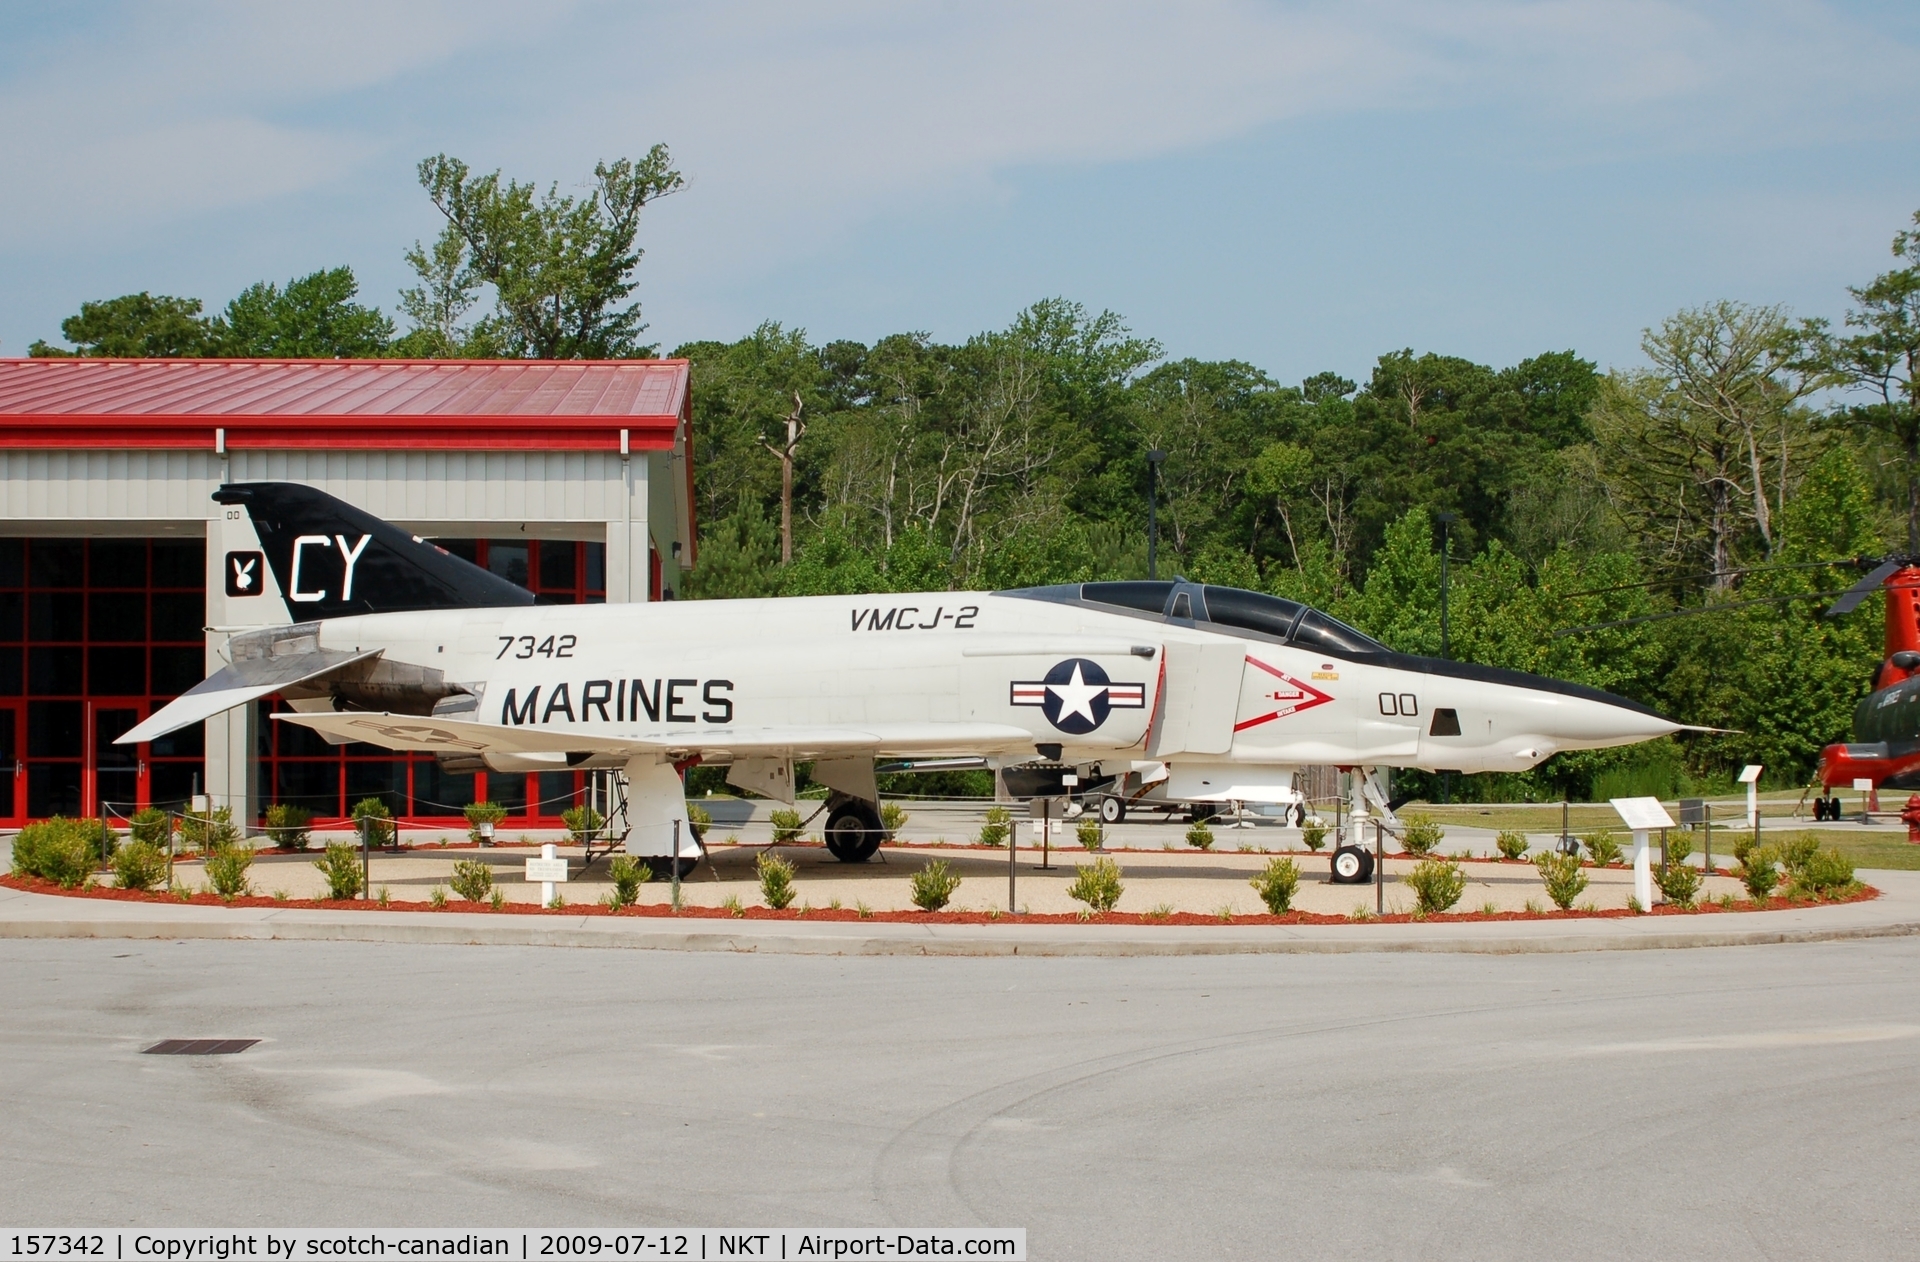 157342, McDonnell RF-4B Phantom II C/N 3689, McDonnell RF-4B Phantom II on display at the Havelock Tourist & Event Center, Havelock, NC